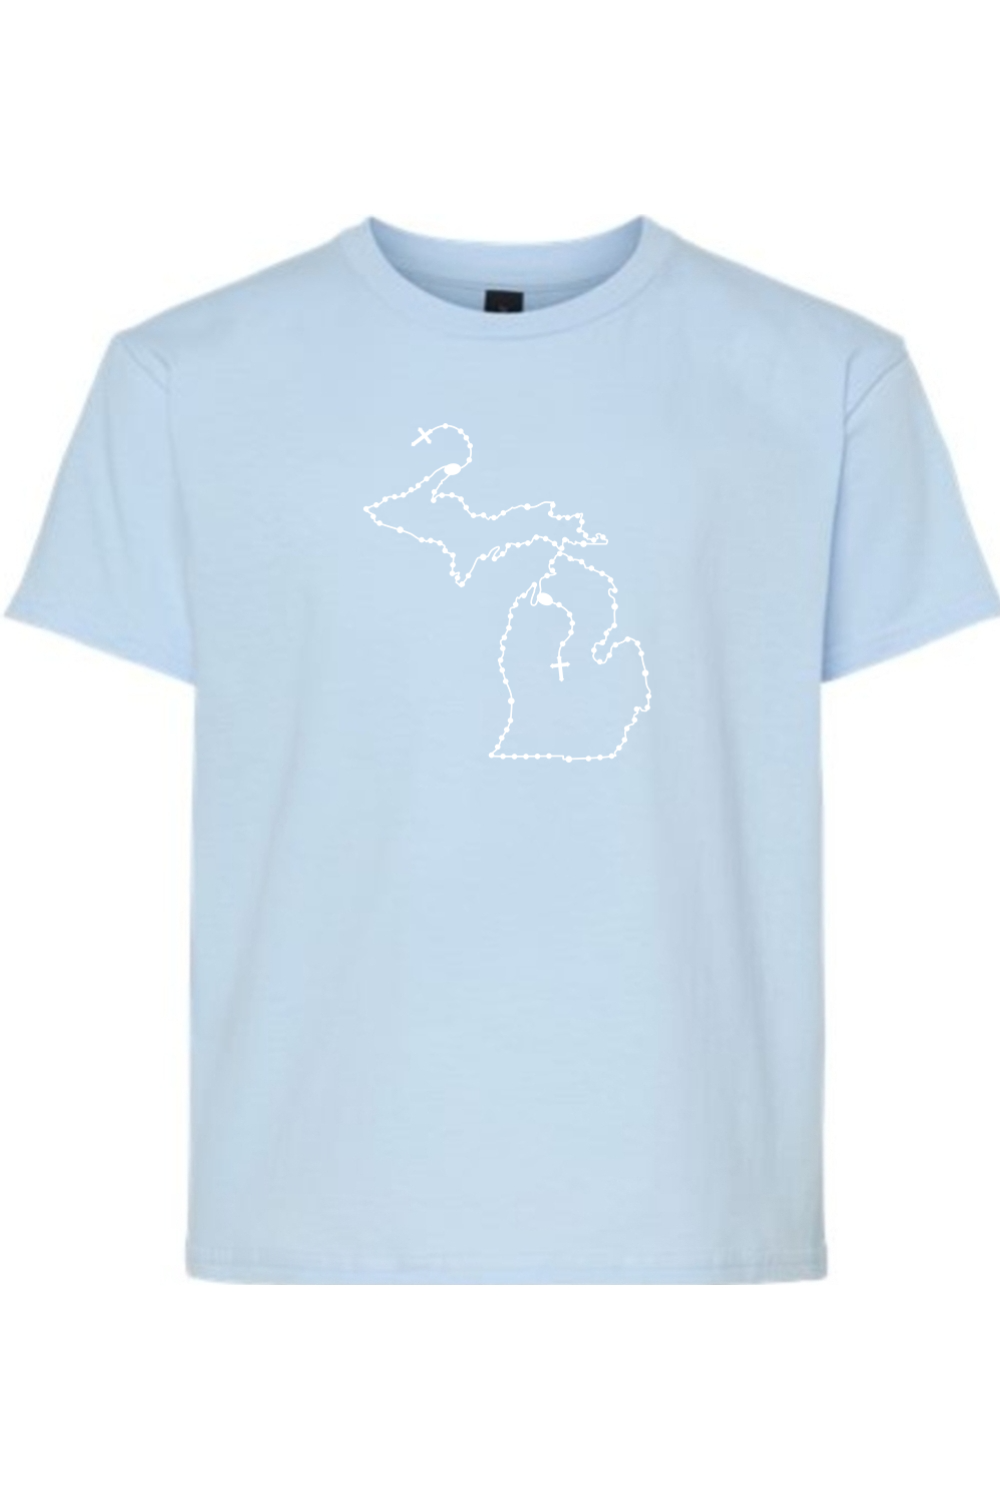 Michigan Catholic Rosary Youth T-shirt